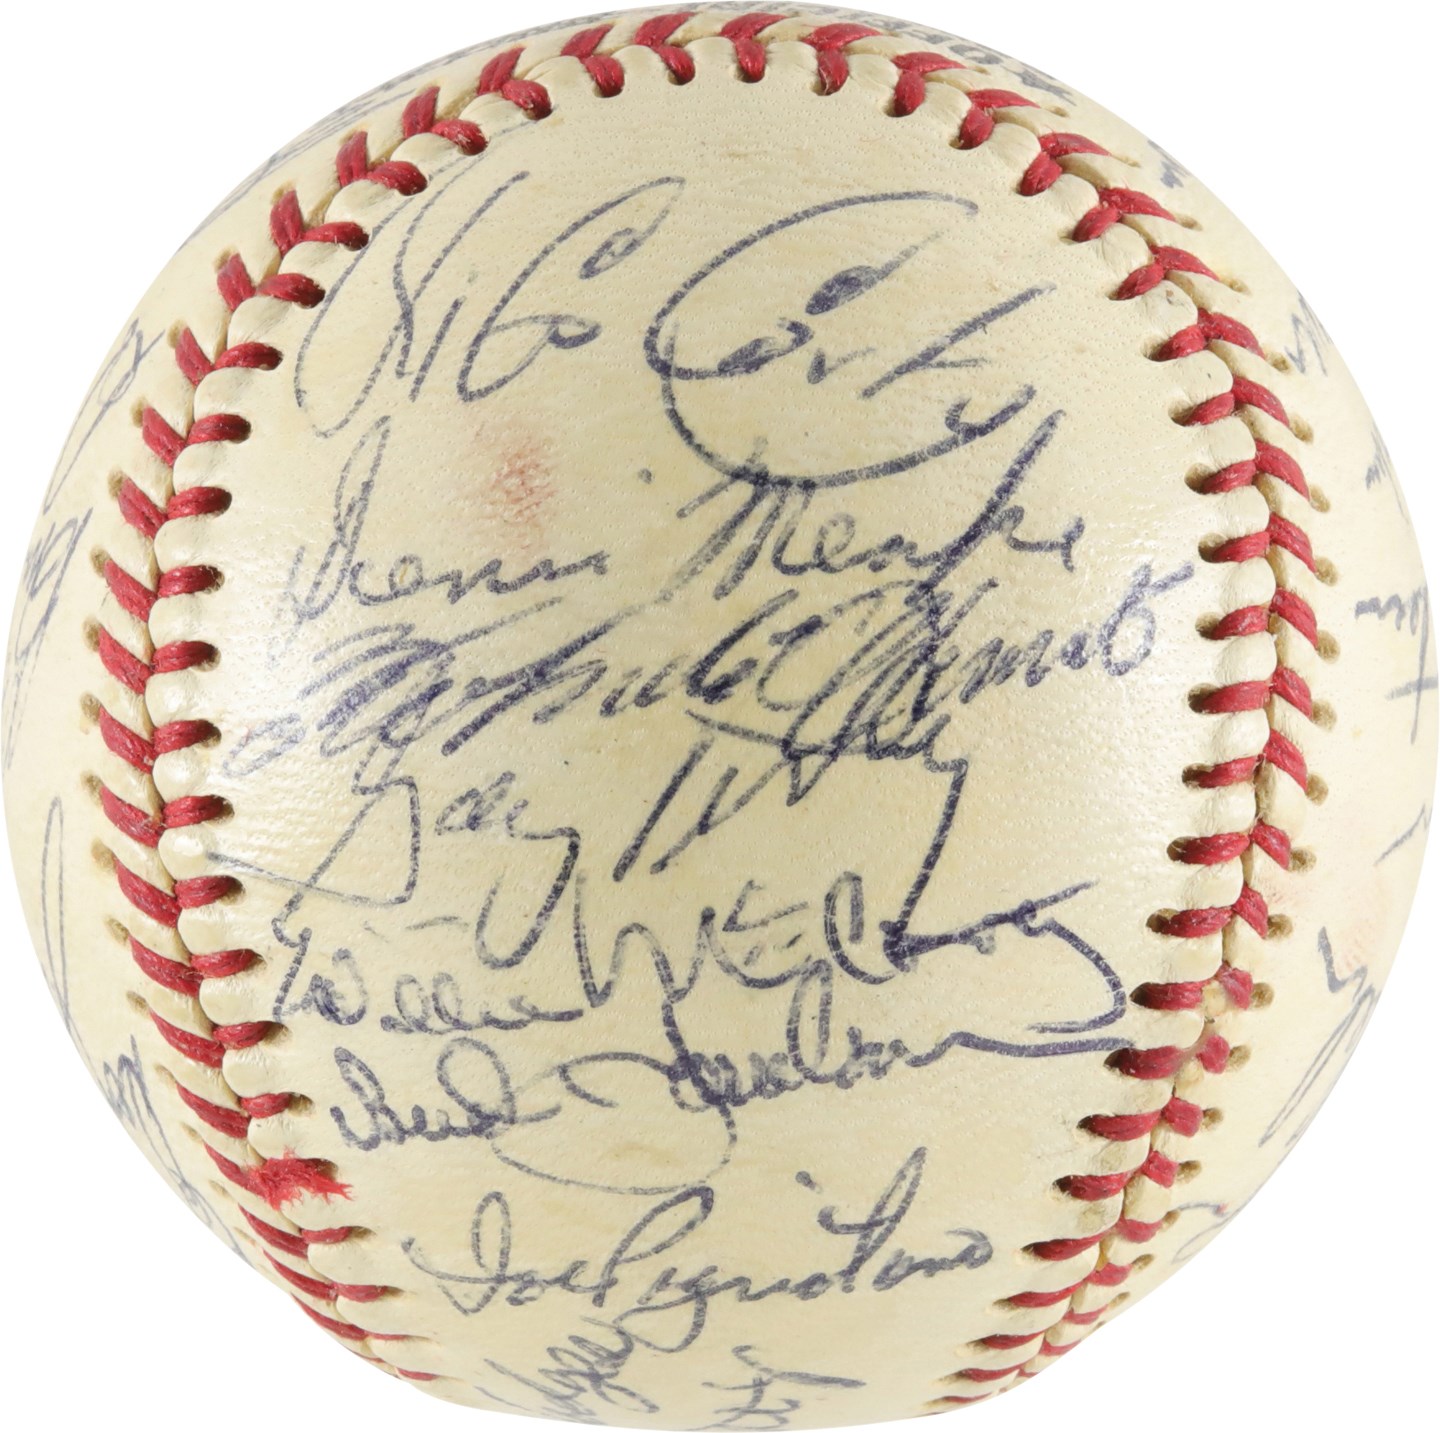 - High Grade 1970 National League All Star Team Signed Baseball w/Roberto Clemente (PSA)